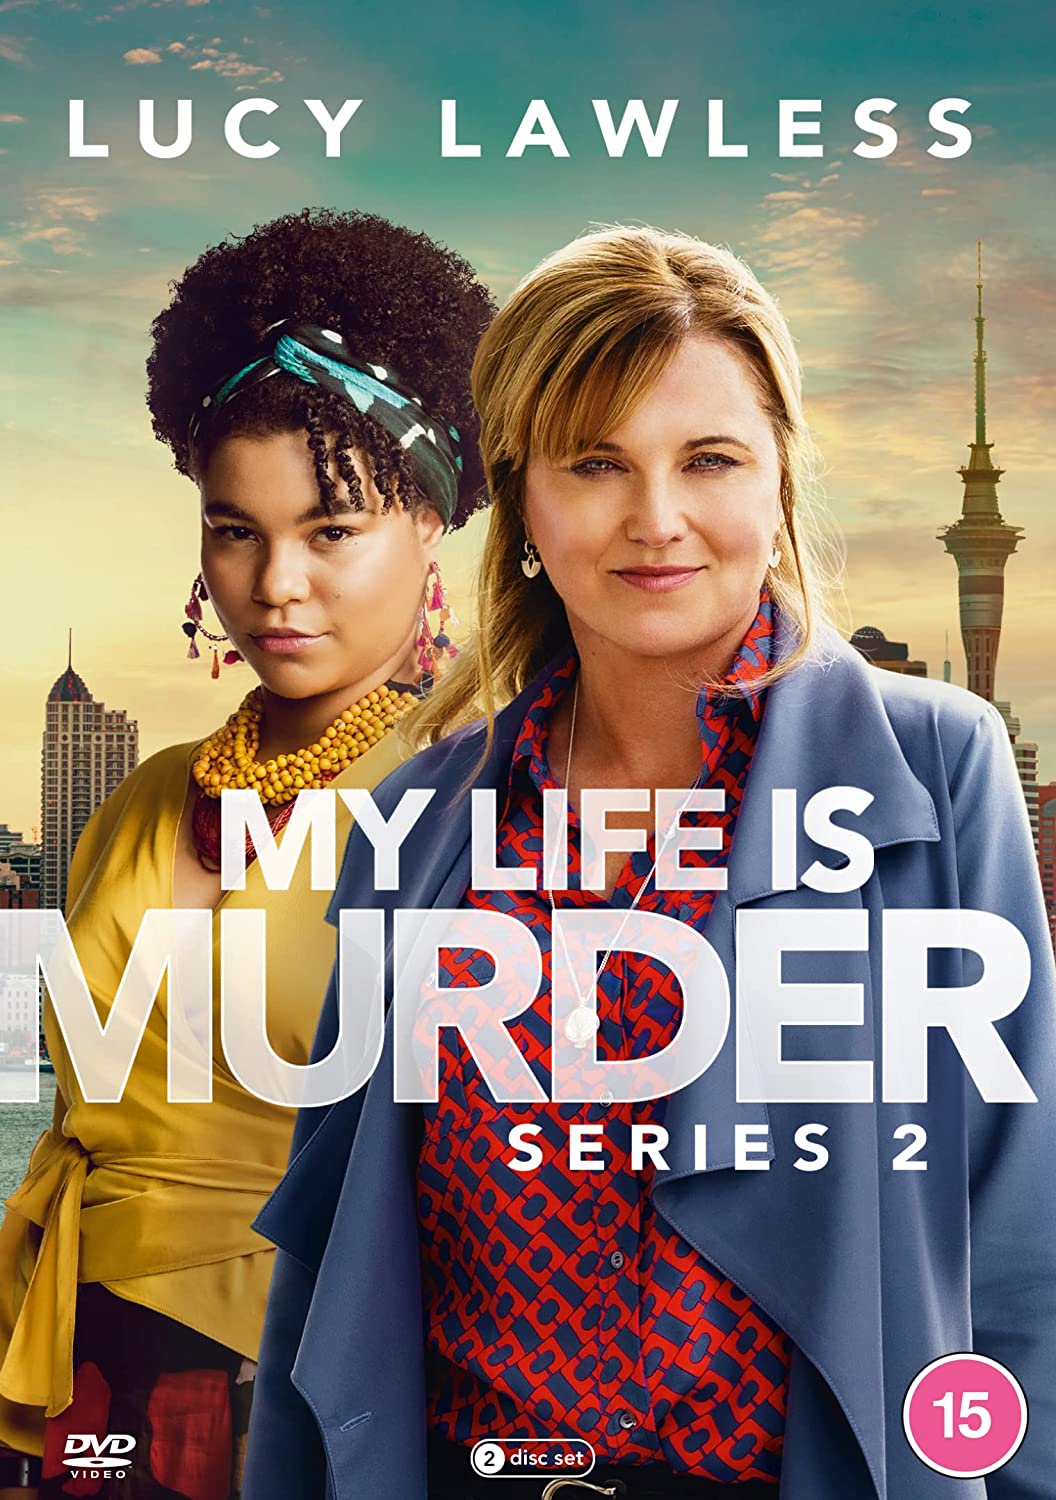 GAGNEZ "My Life Is Murder : Série 2" sur DVD 4